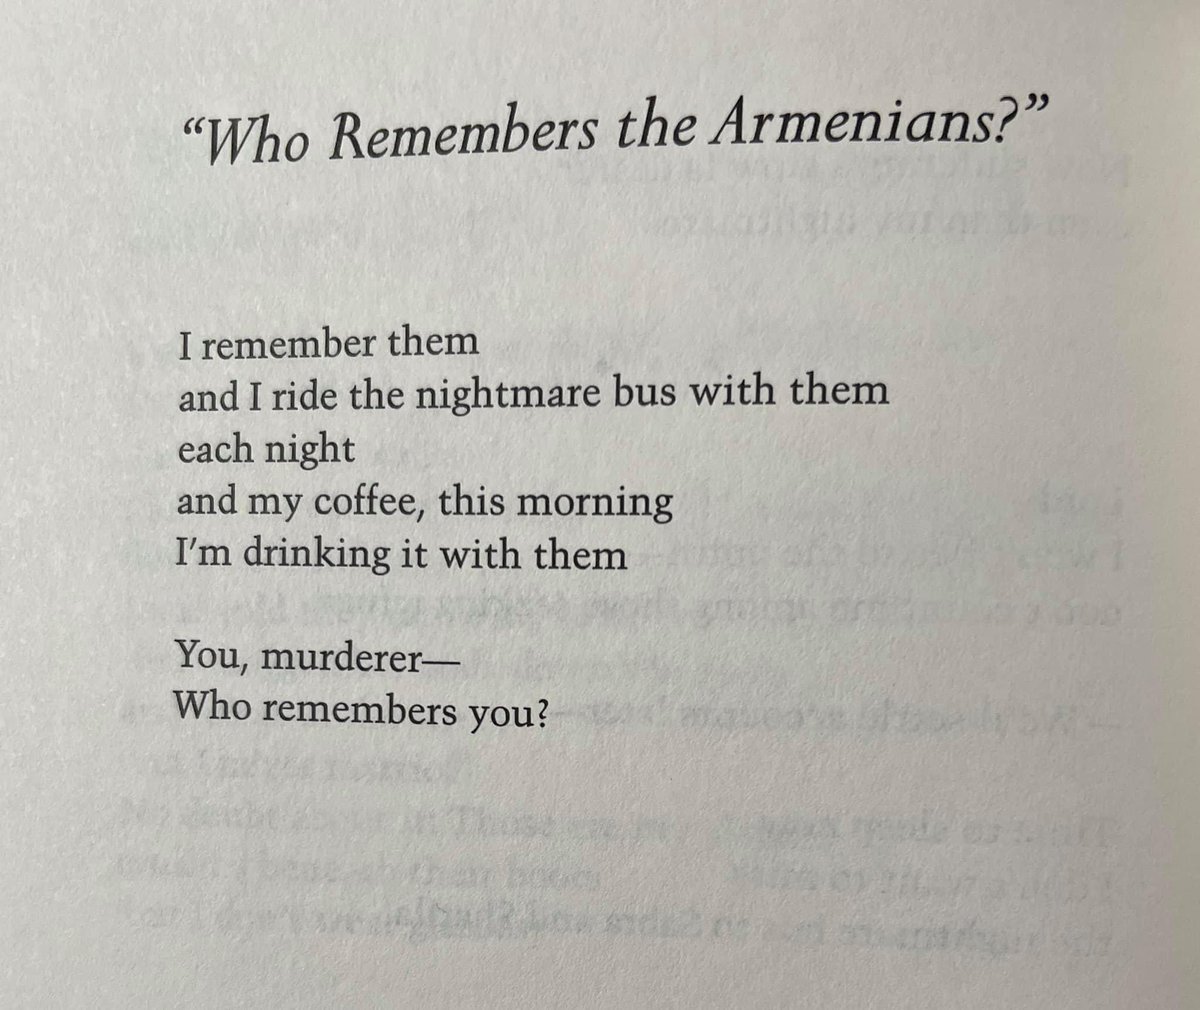 “Who remembers the Armenians?” A poem by Palestinian poet Najwan Darwish